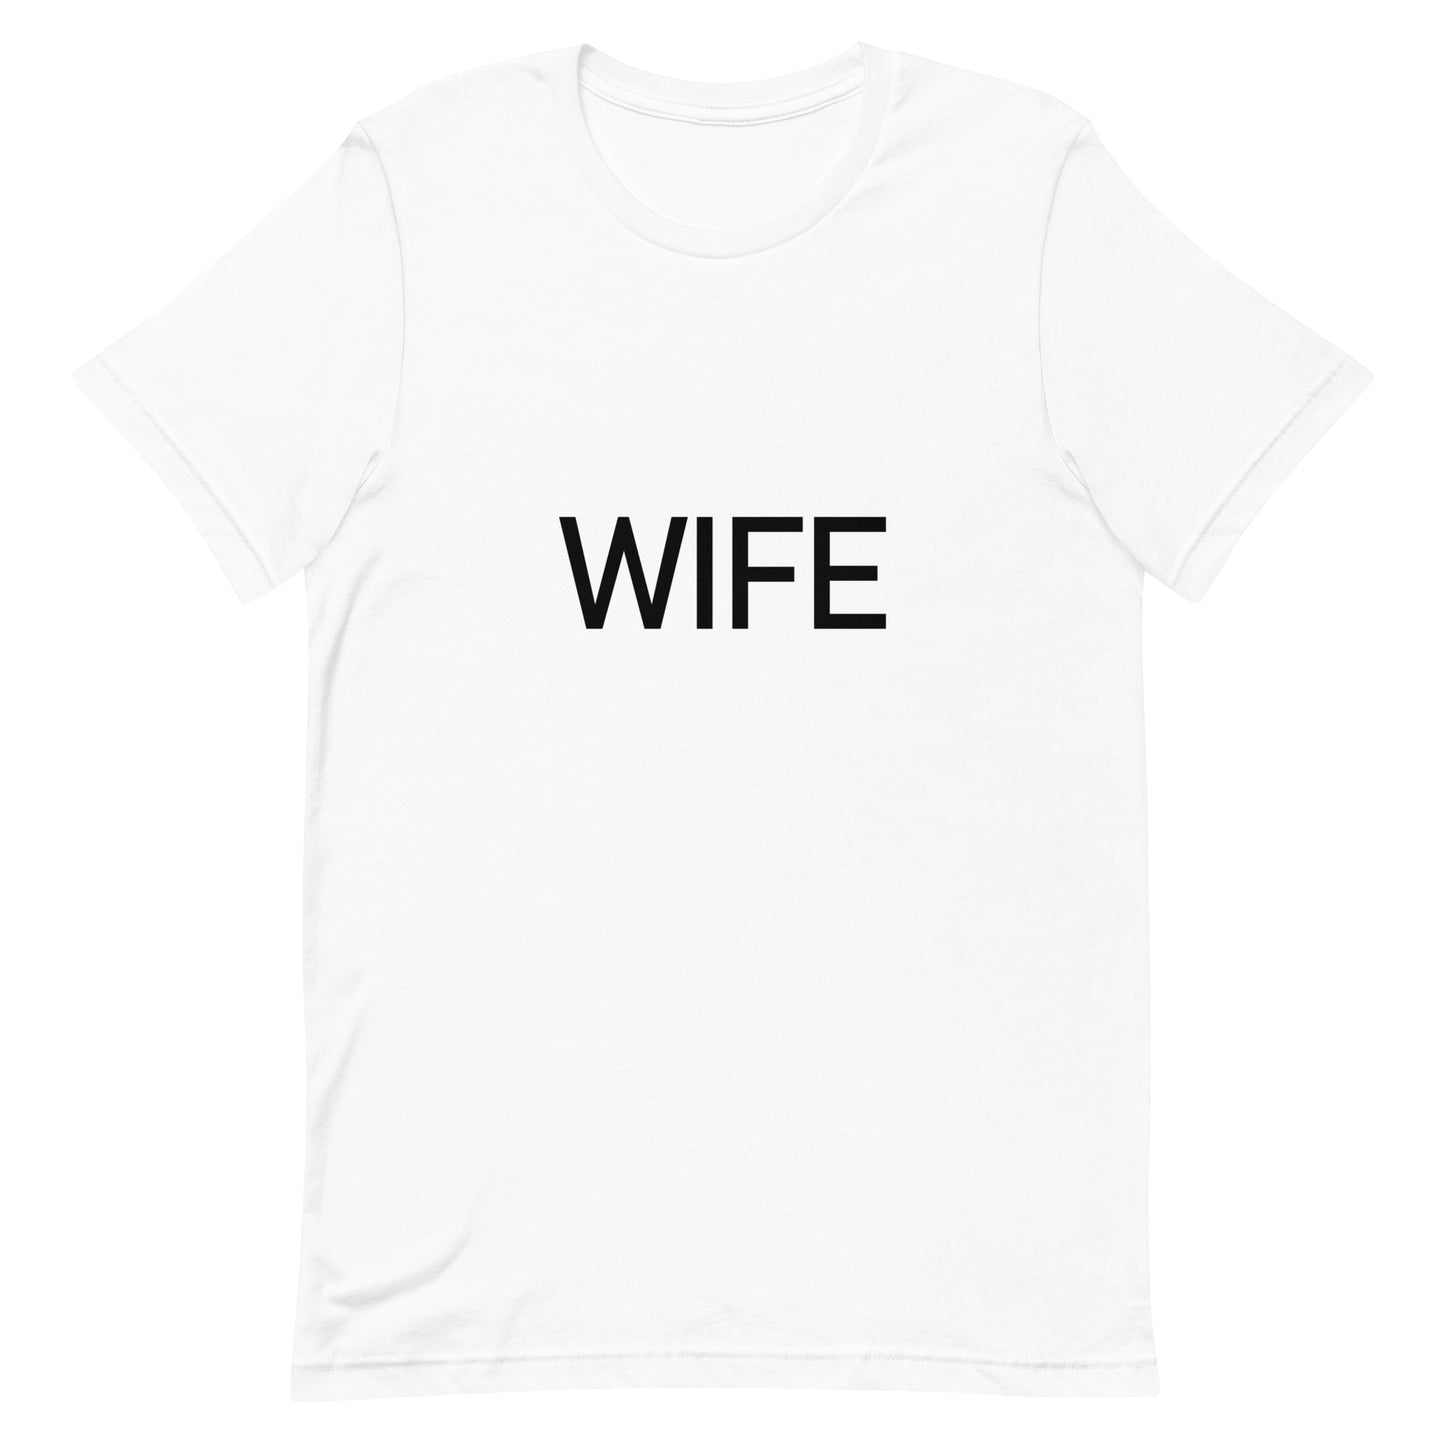 Wife - Sustainably Made Women’s Short Sleeve Tee